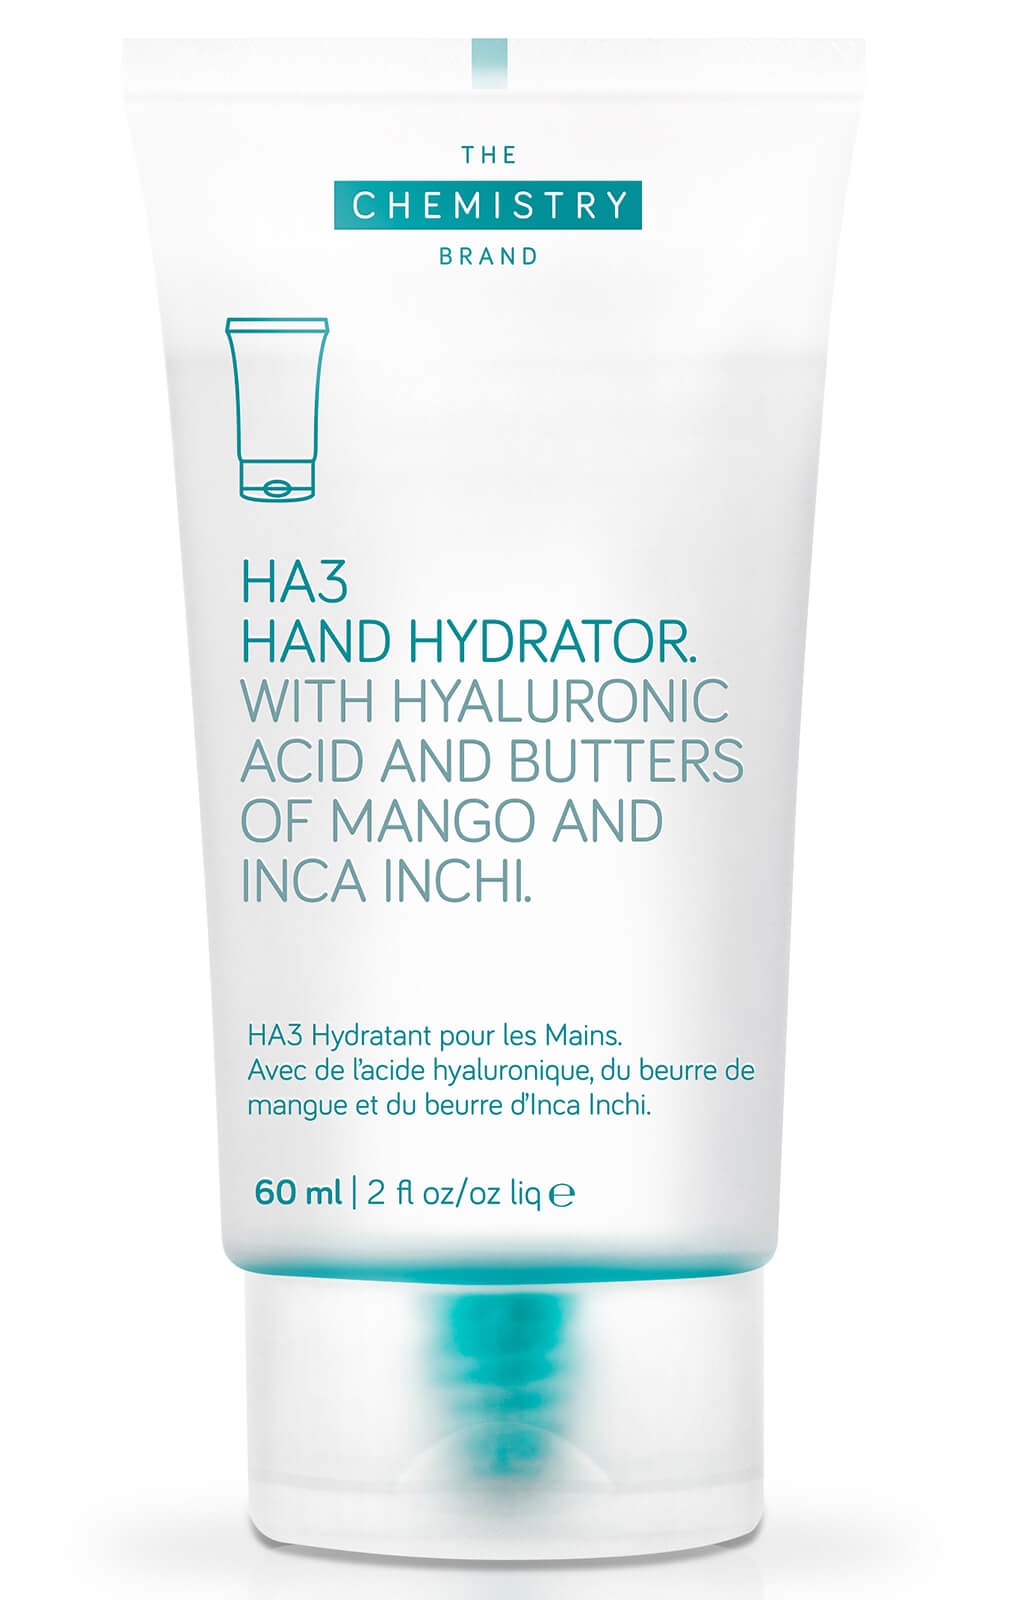 The Chemistry Brand Ha3 Hand Hydrator